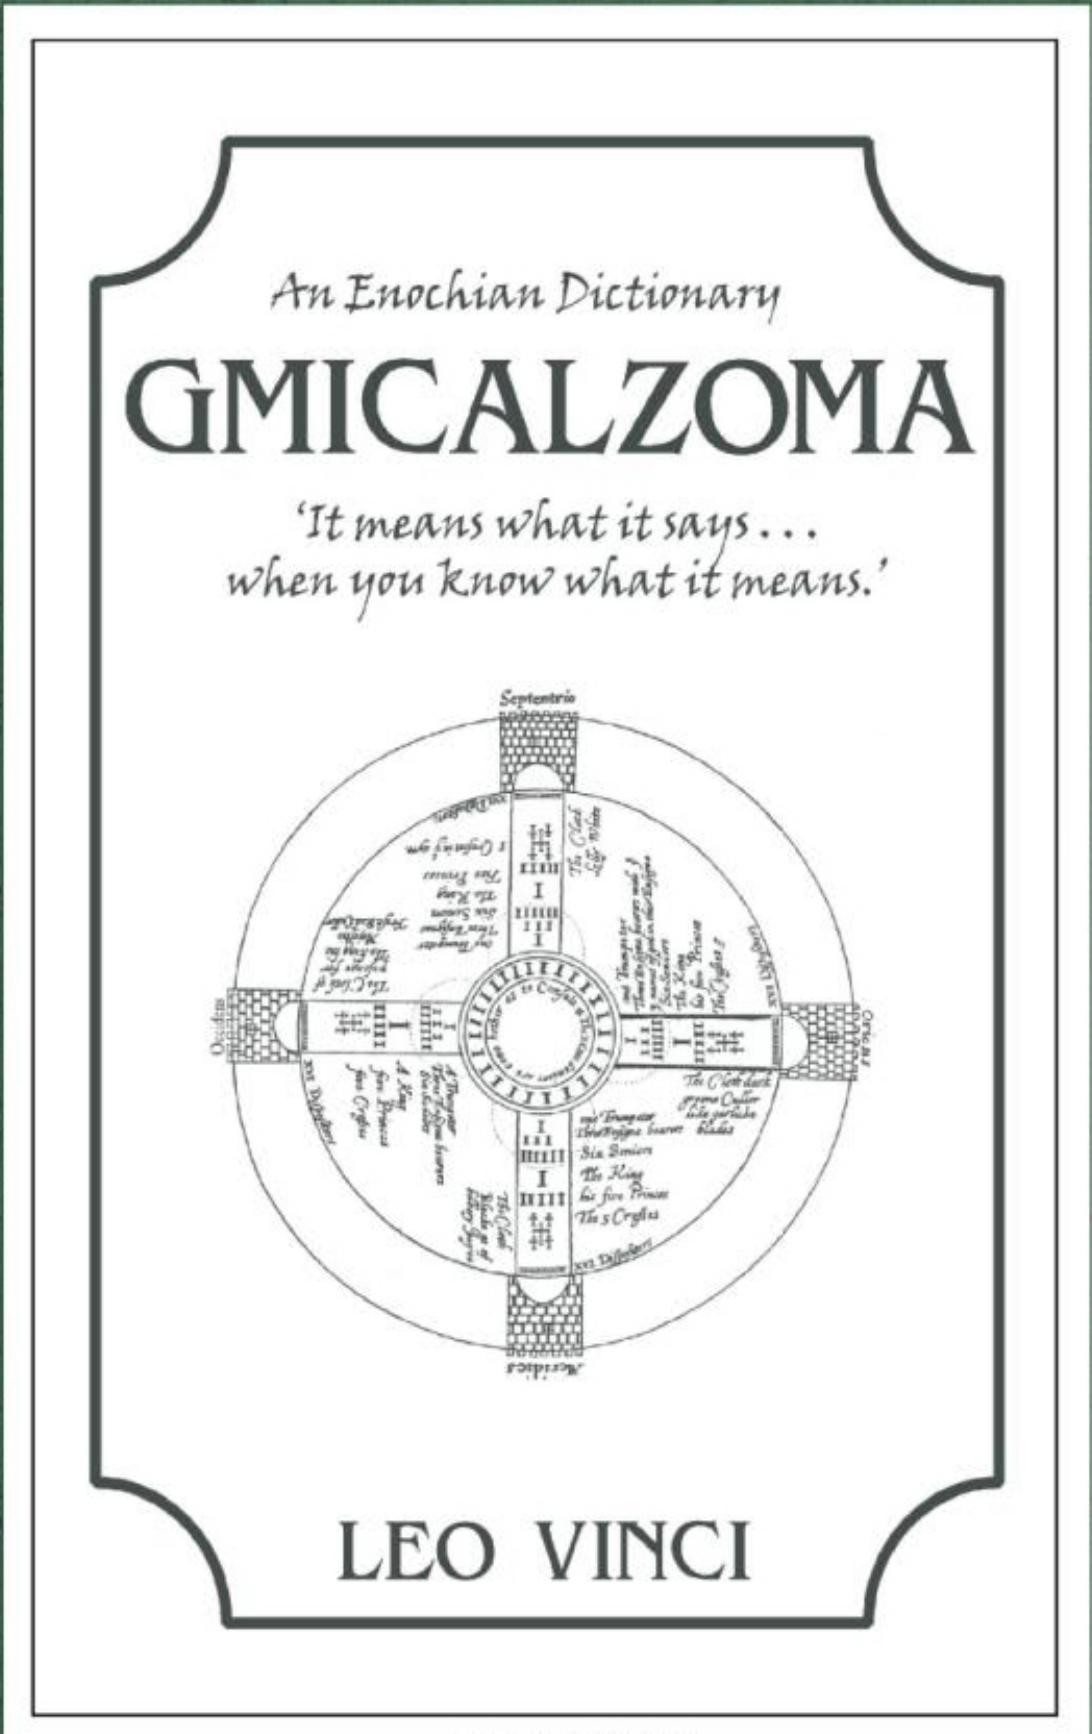 An Enochian Dictionary - Gmicalzoma